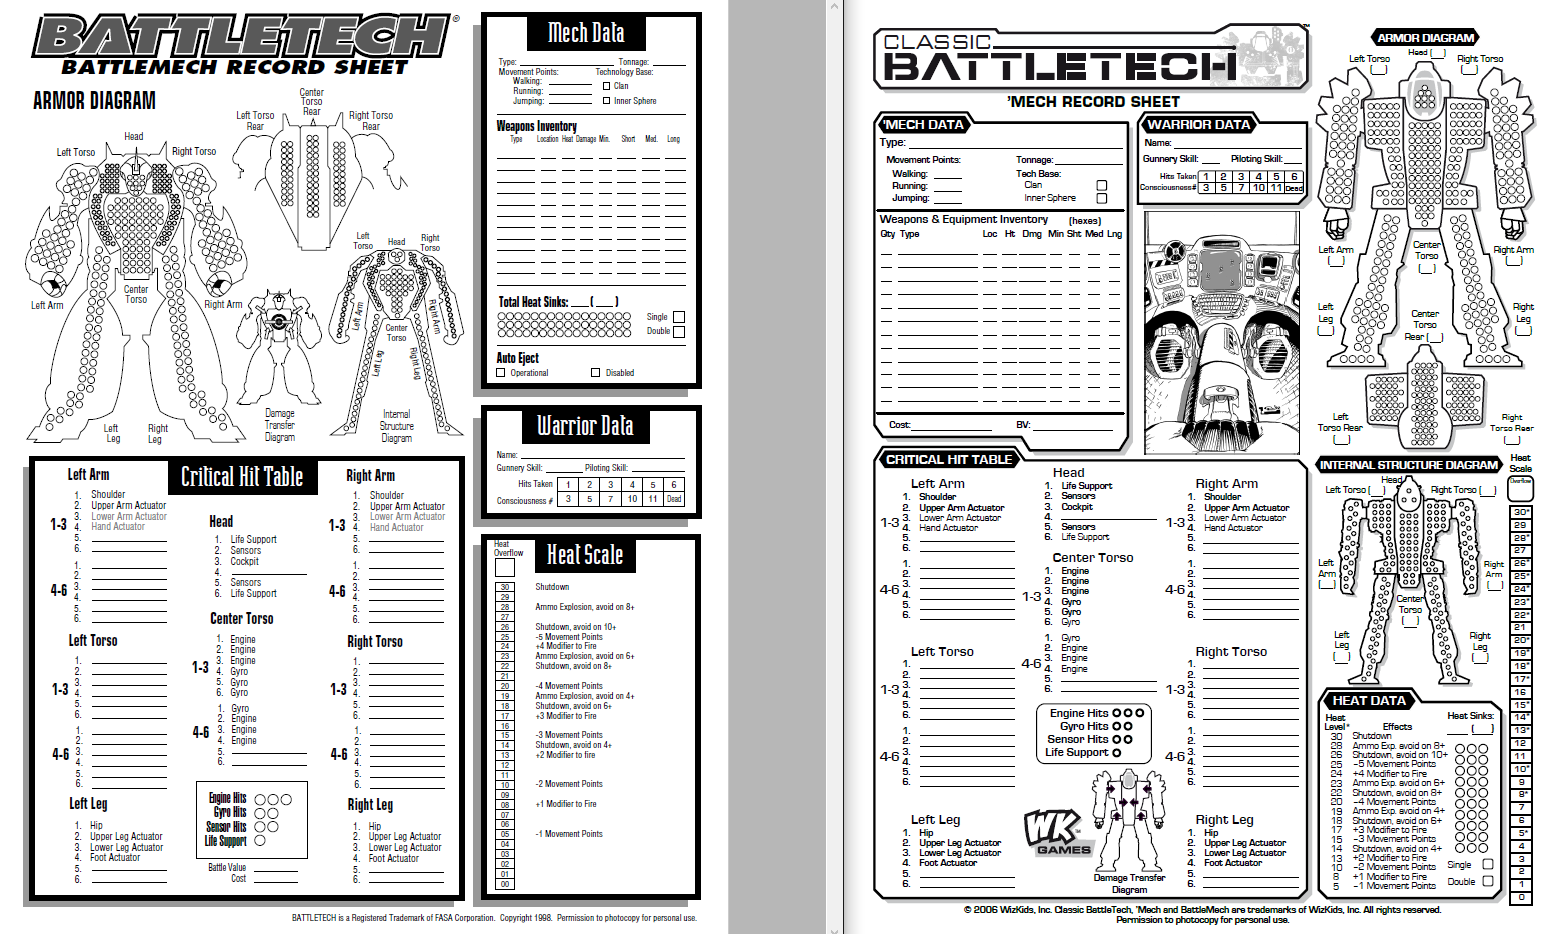 battletech record sheets 3050